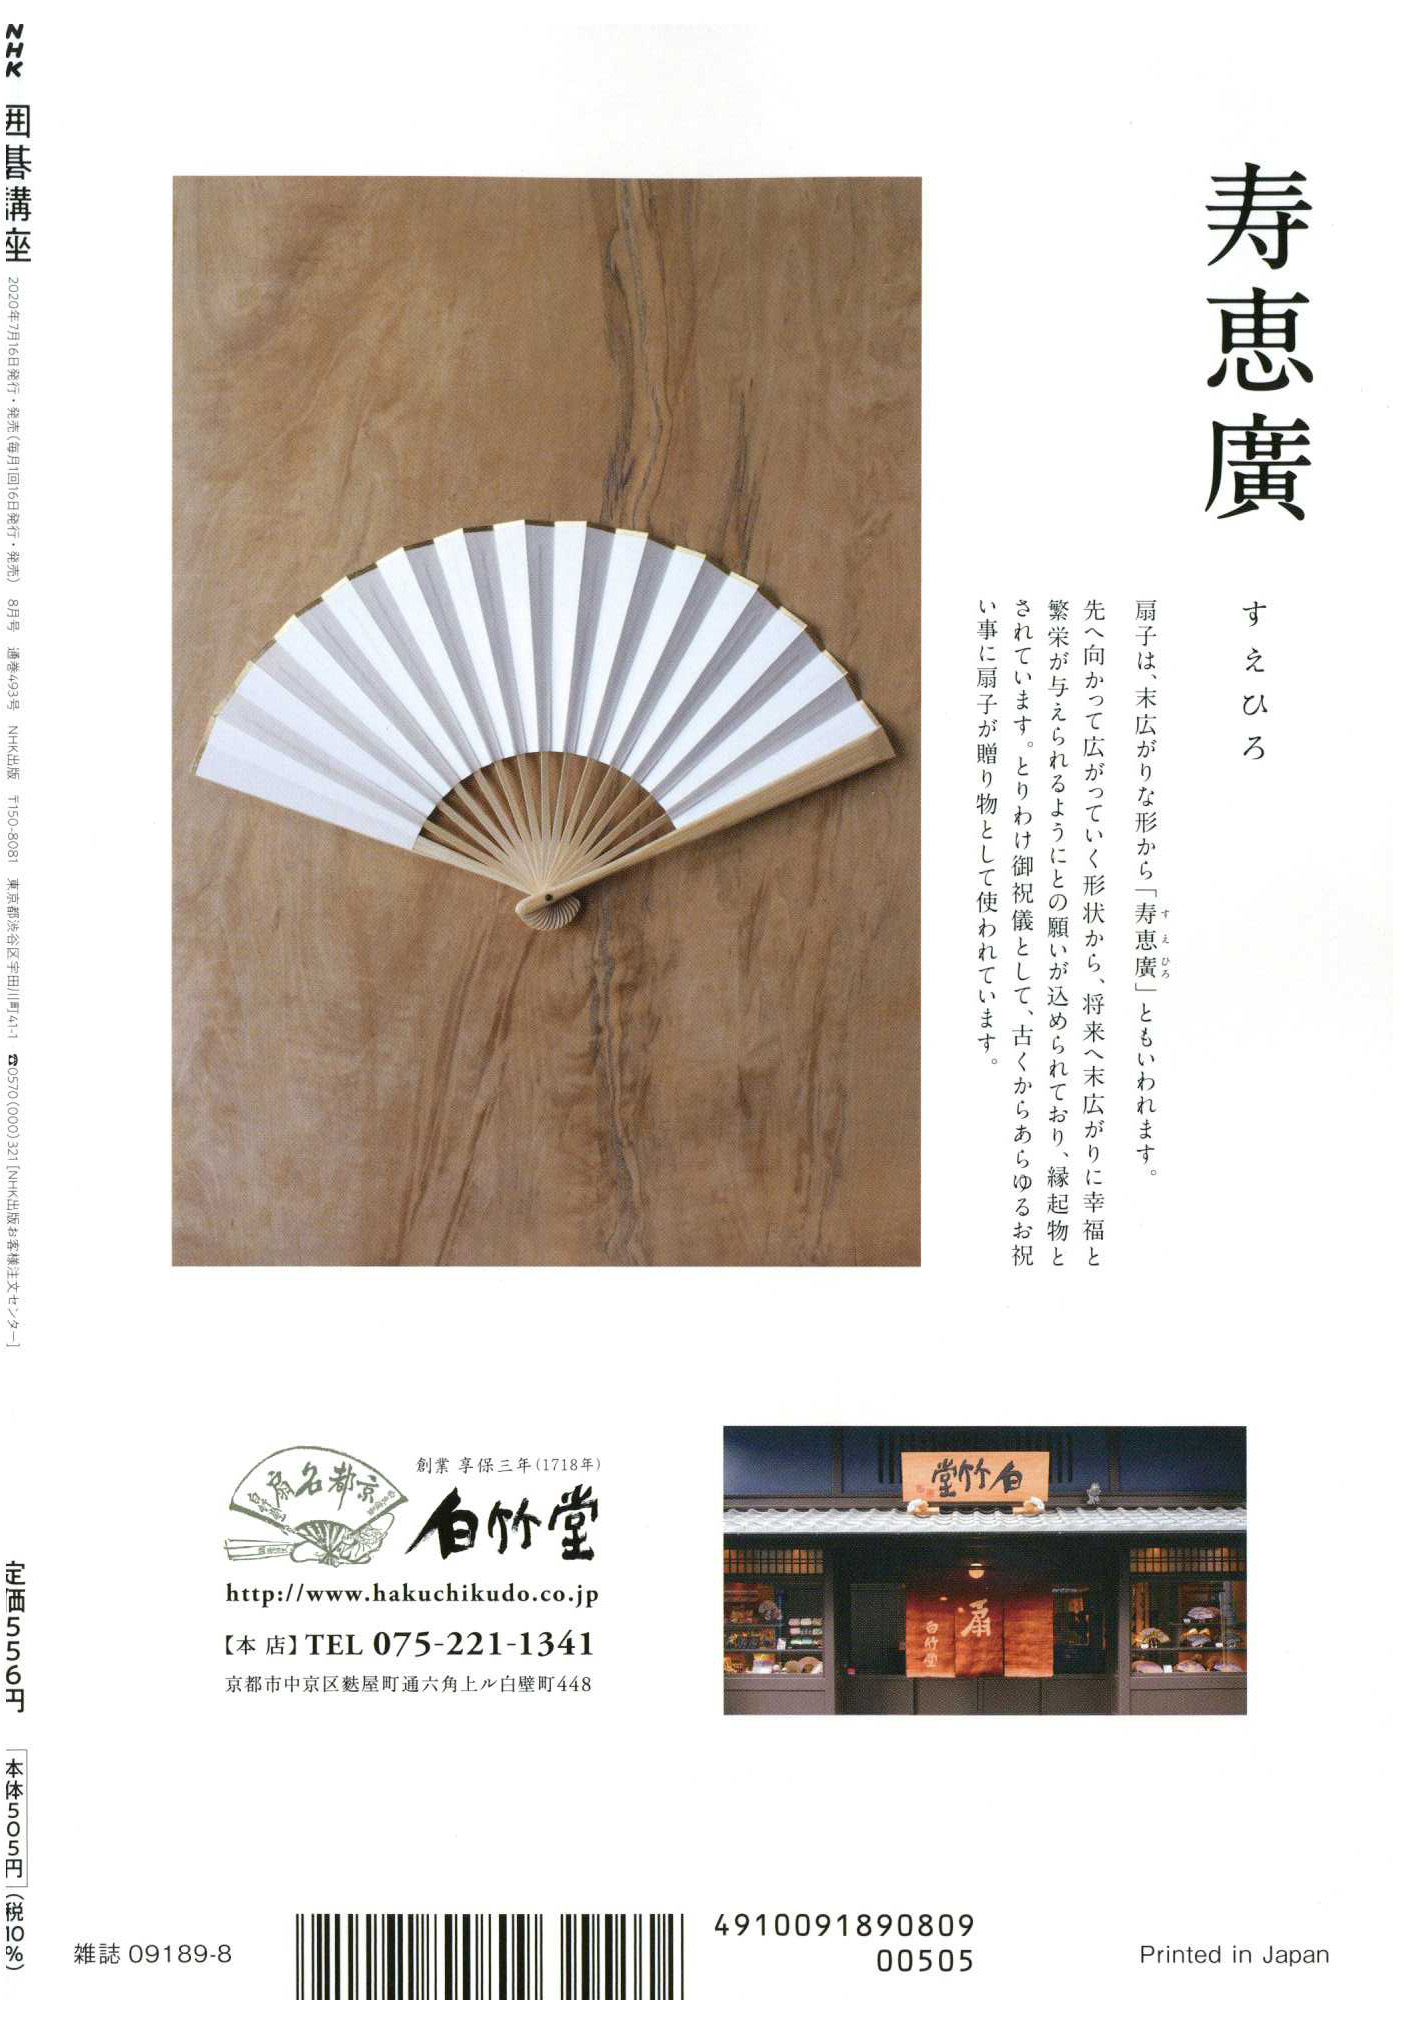 Nhkテキスト囲碁講座 8月号 に掲載されました 京扇子製造 販売 白竹堂